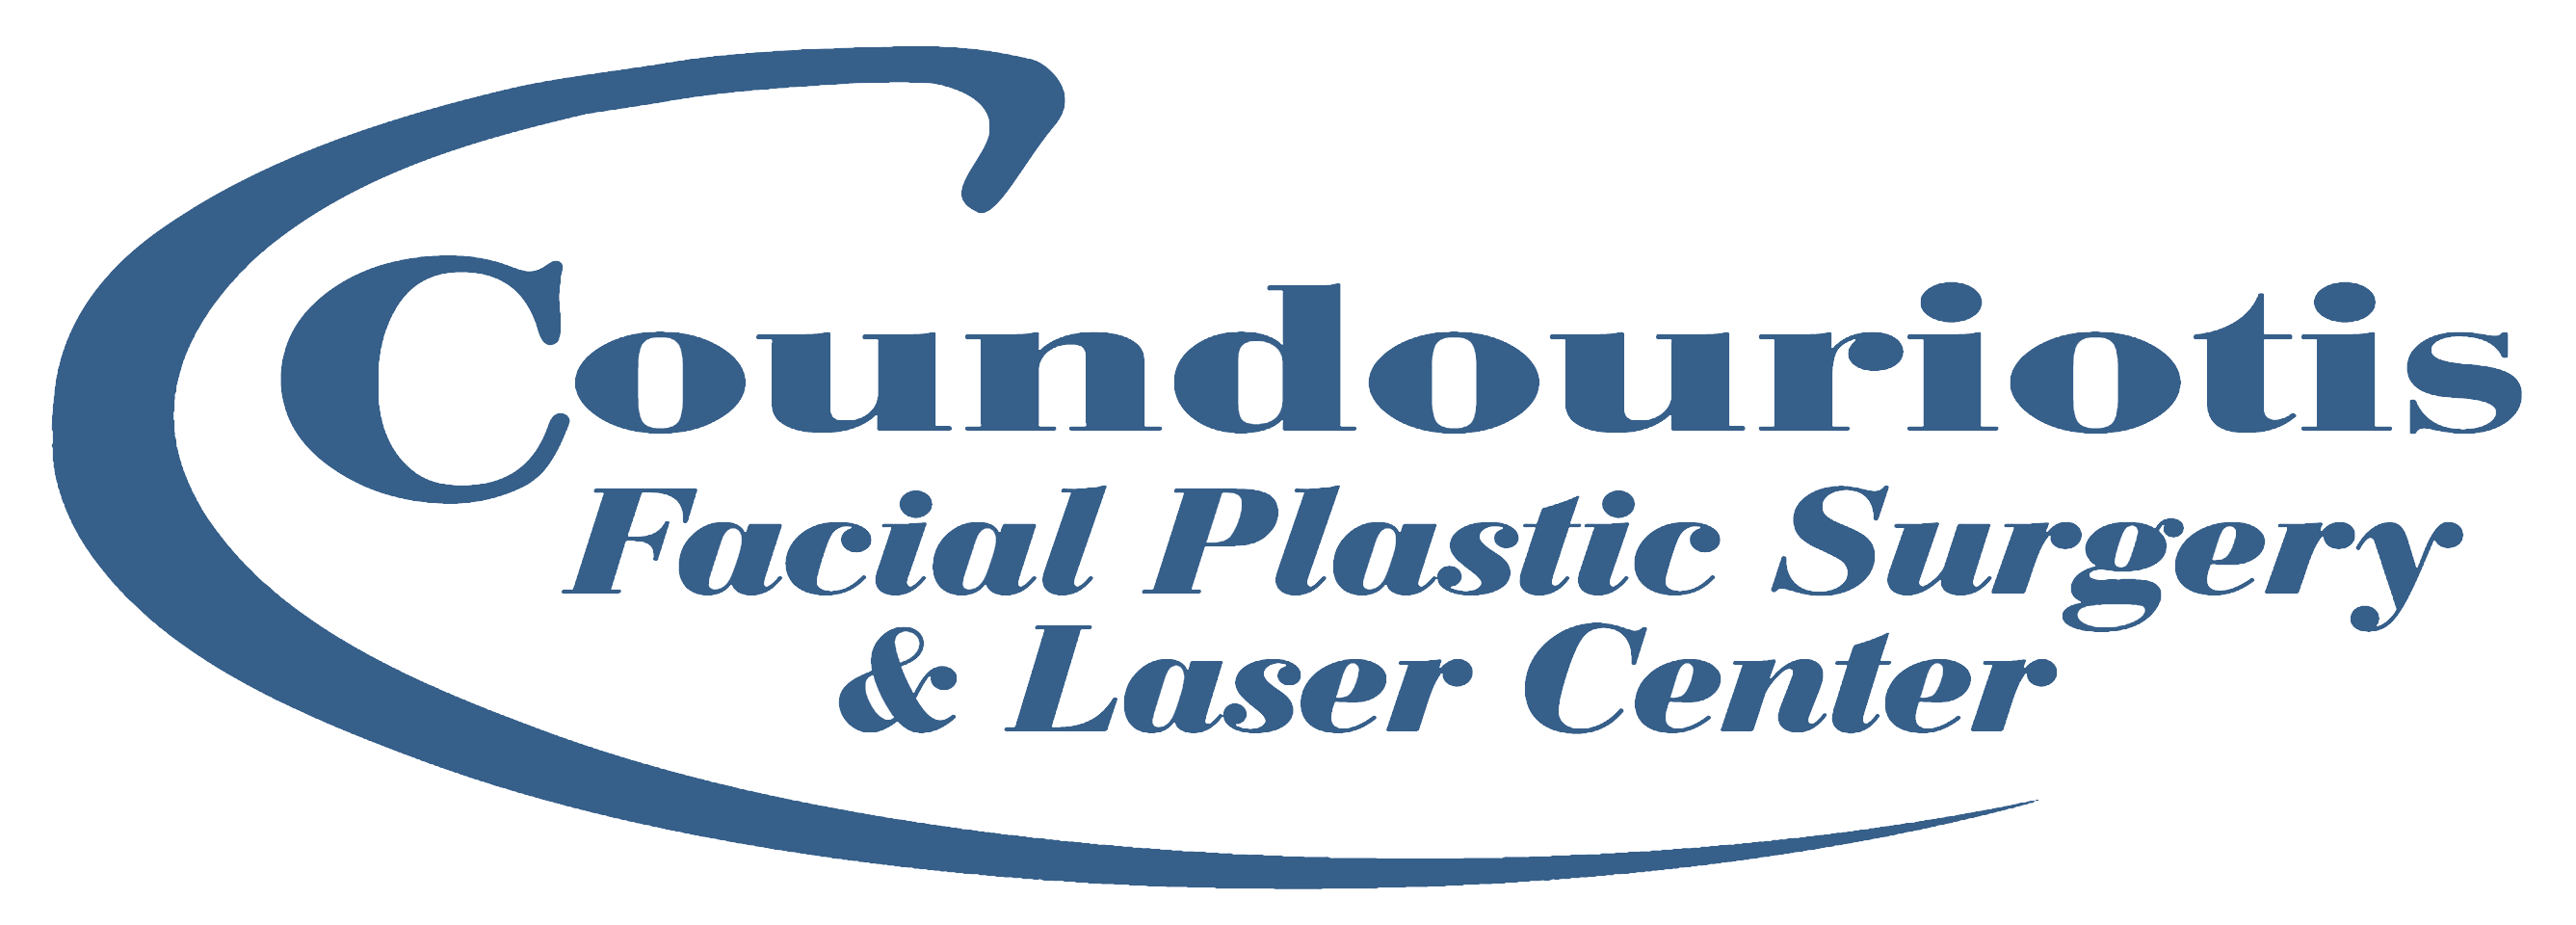 Coundouriotis Facial Plastic Surgery & Laser Center